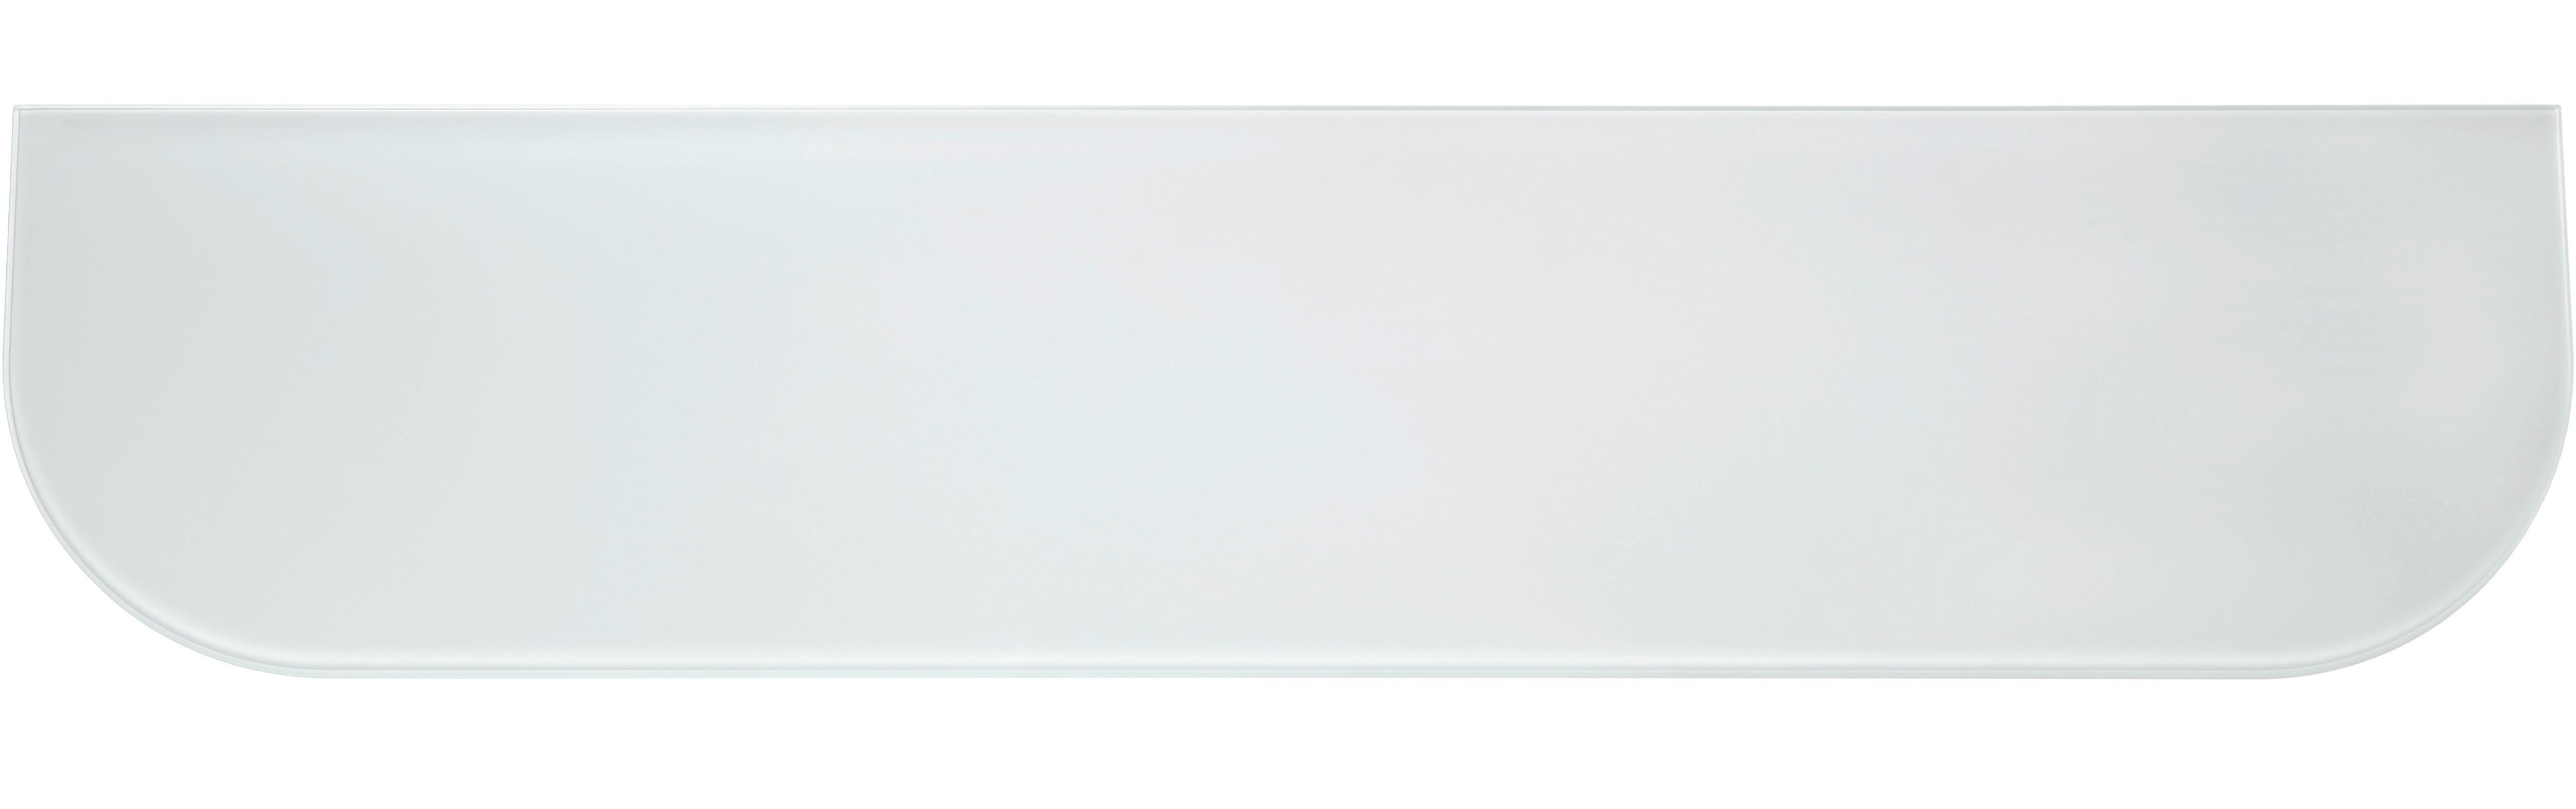 Wandregal Glas Gerundet in Weiß - Opal, Glas (78/0,6/18cm) - Modern Living